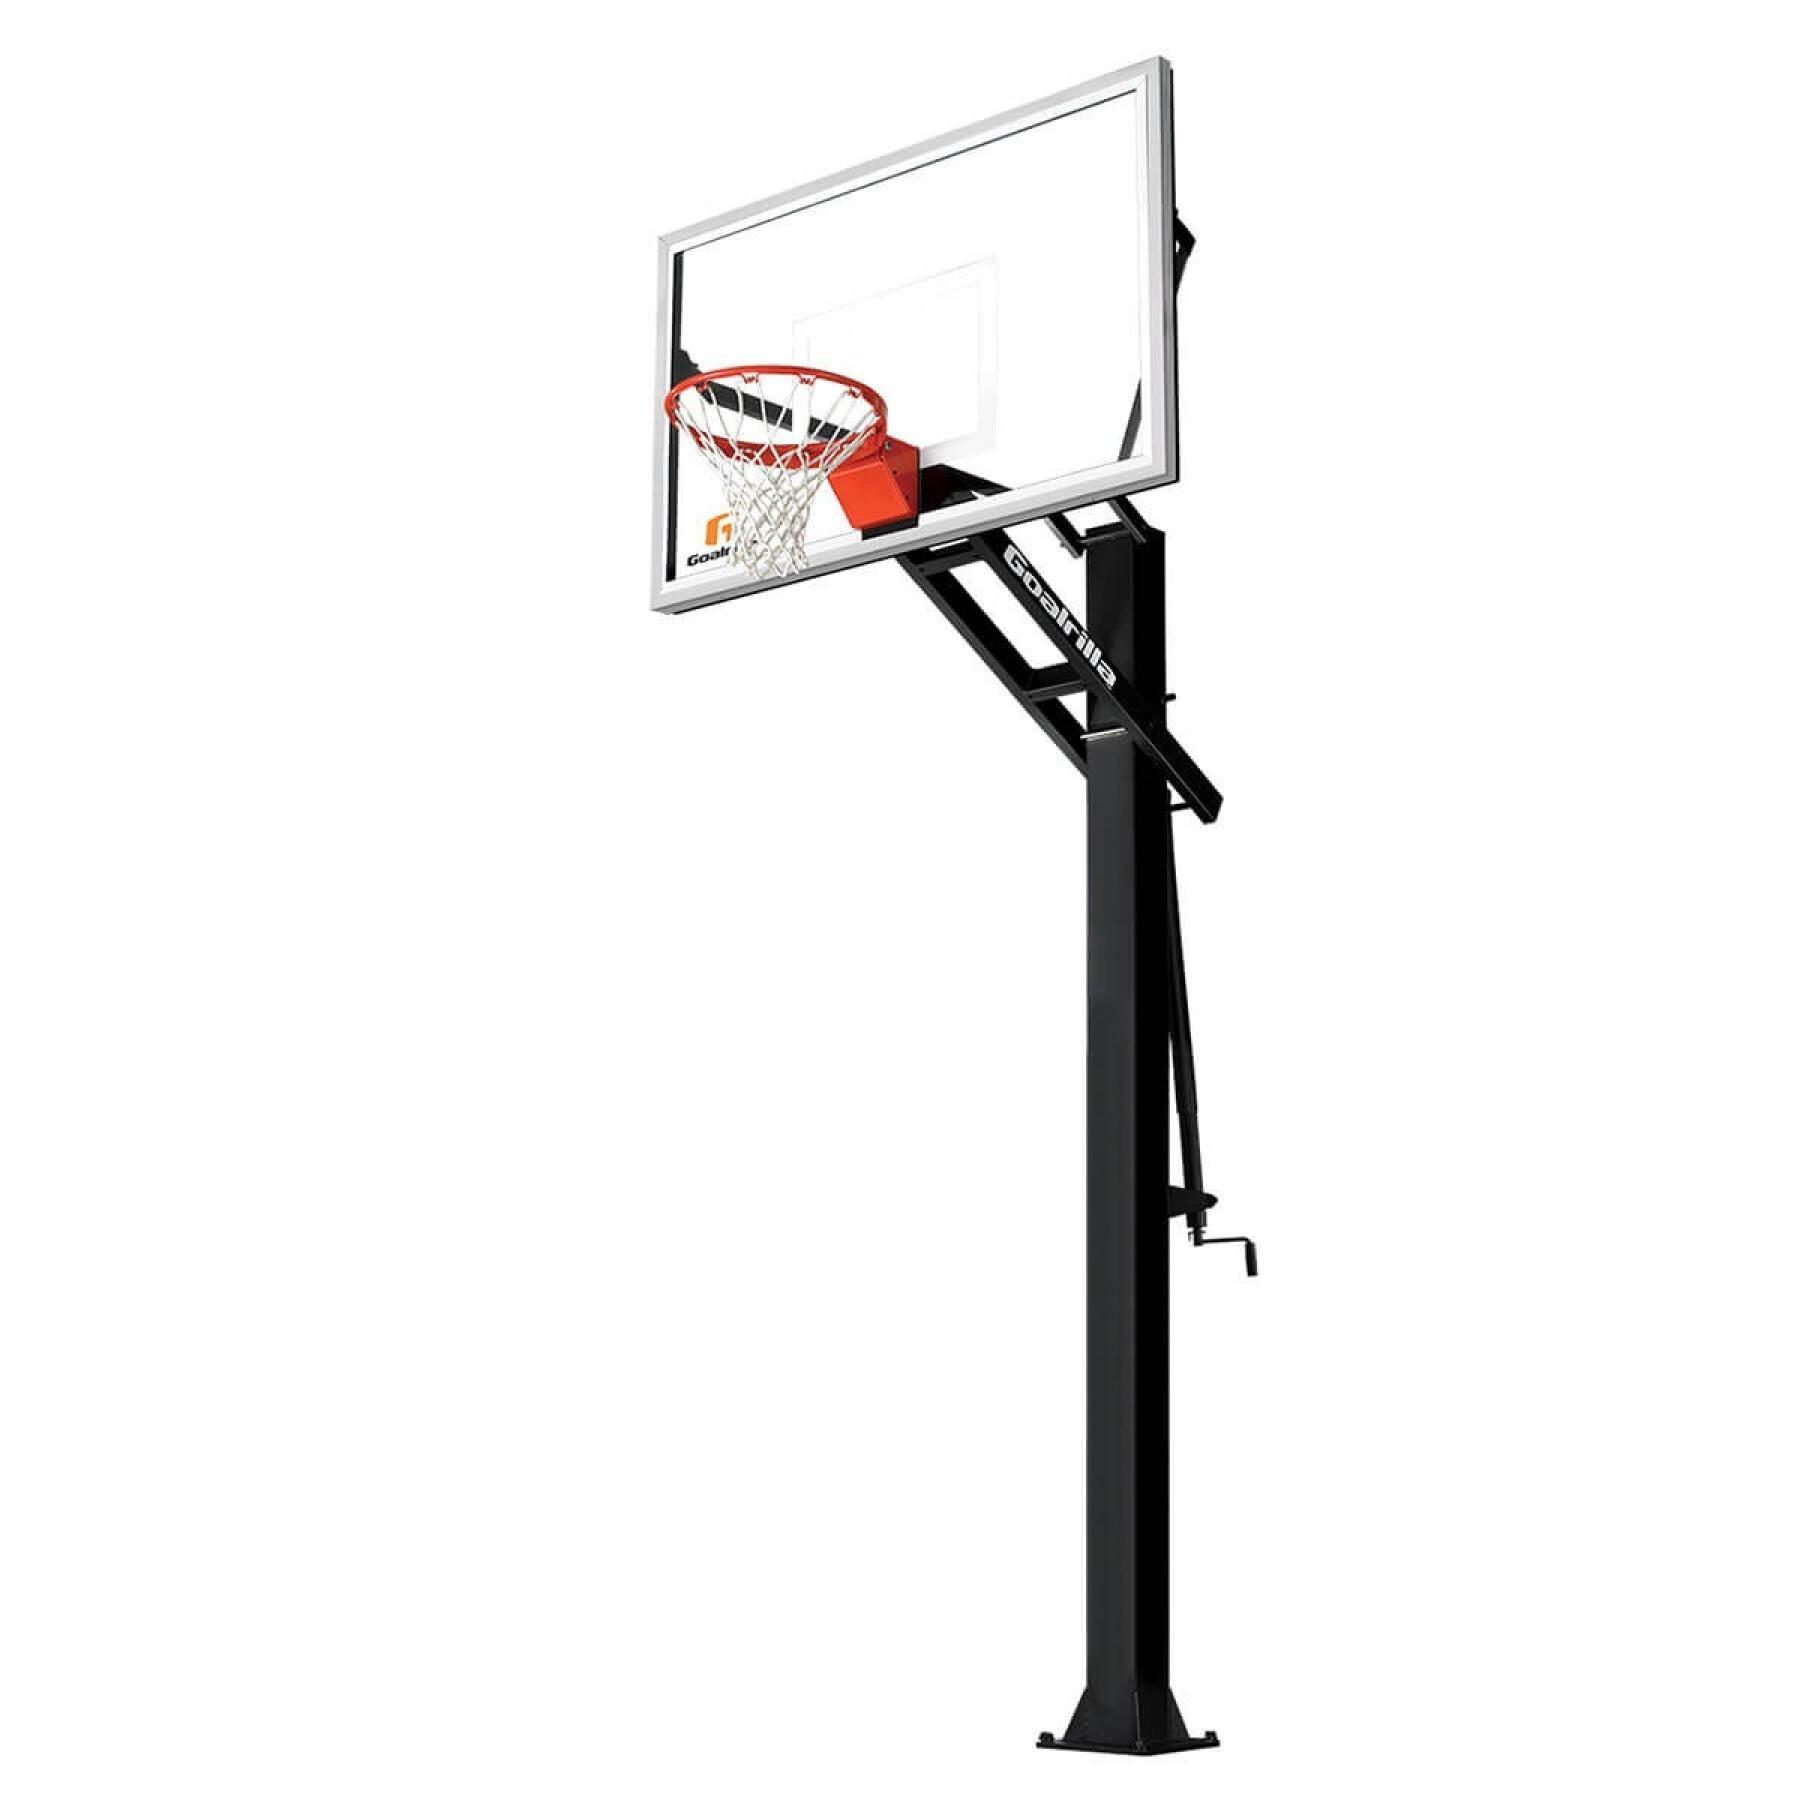 Basketkorg Goalrilla GS60C